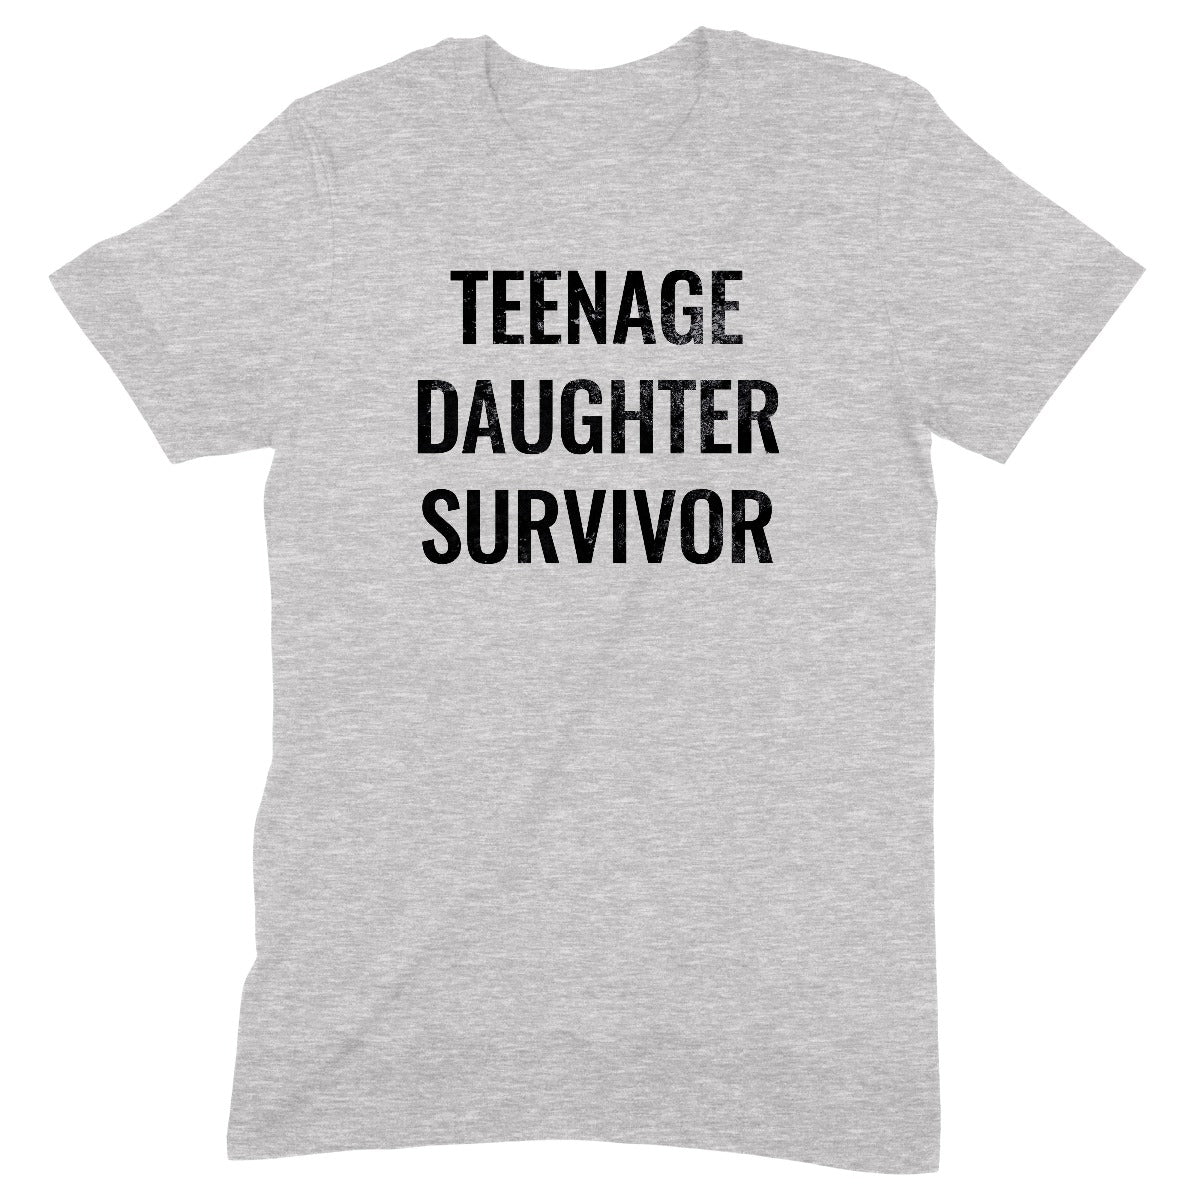 "Teenage Daughter Surviver" Premium Midweight Ringspun Cotton T-Shirt - Mens/Womens Fits